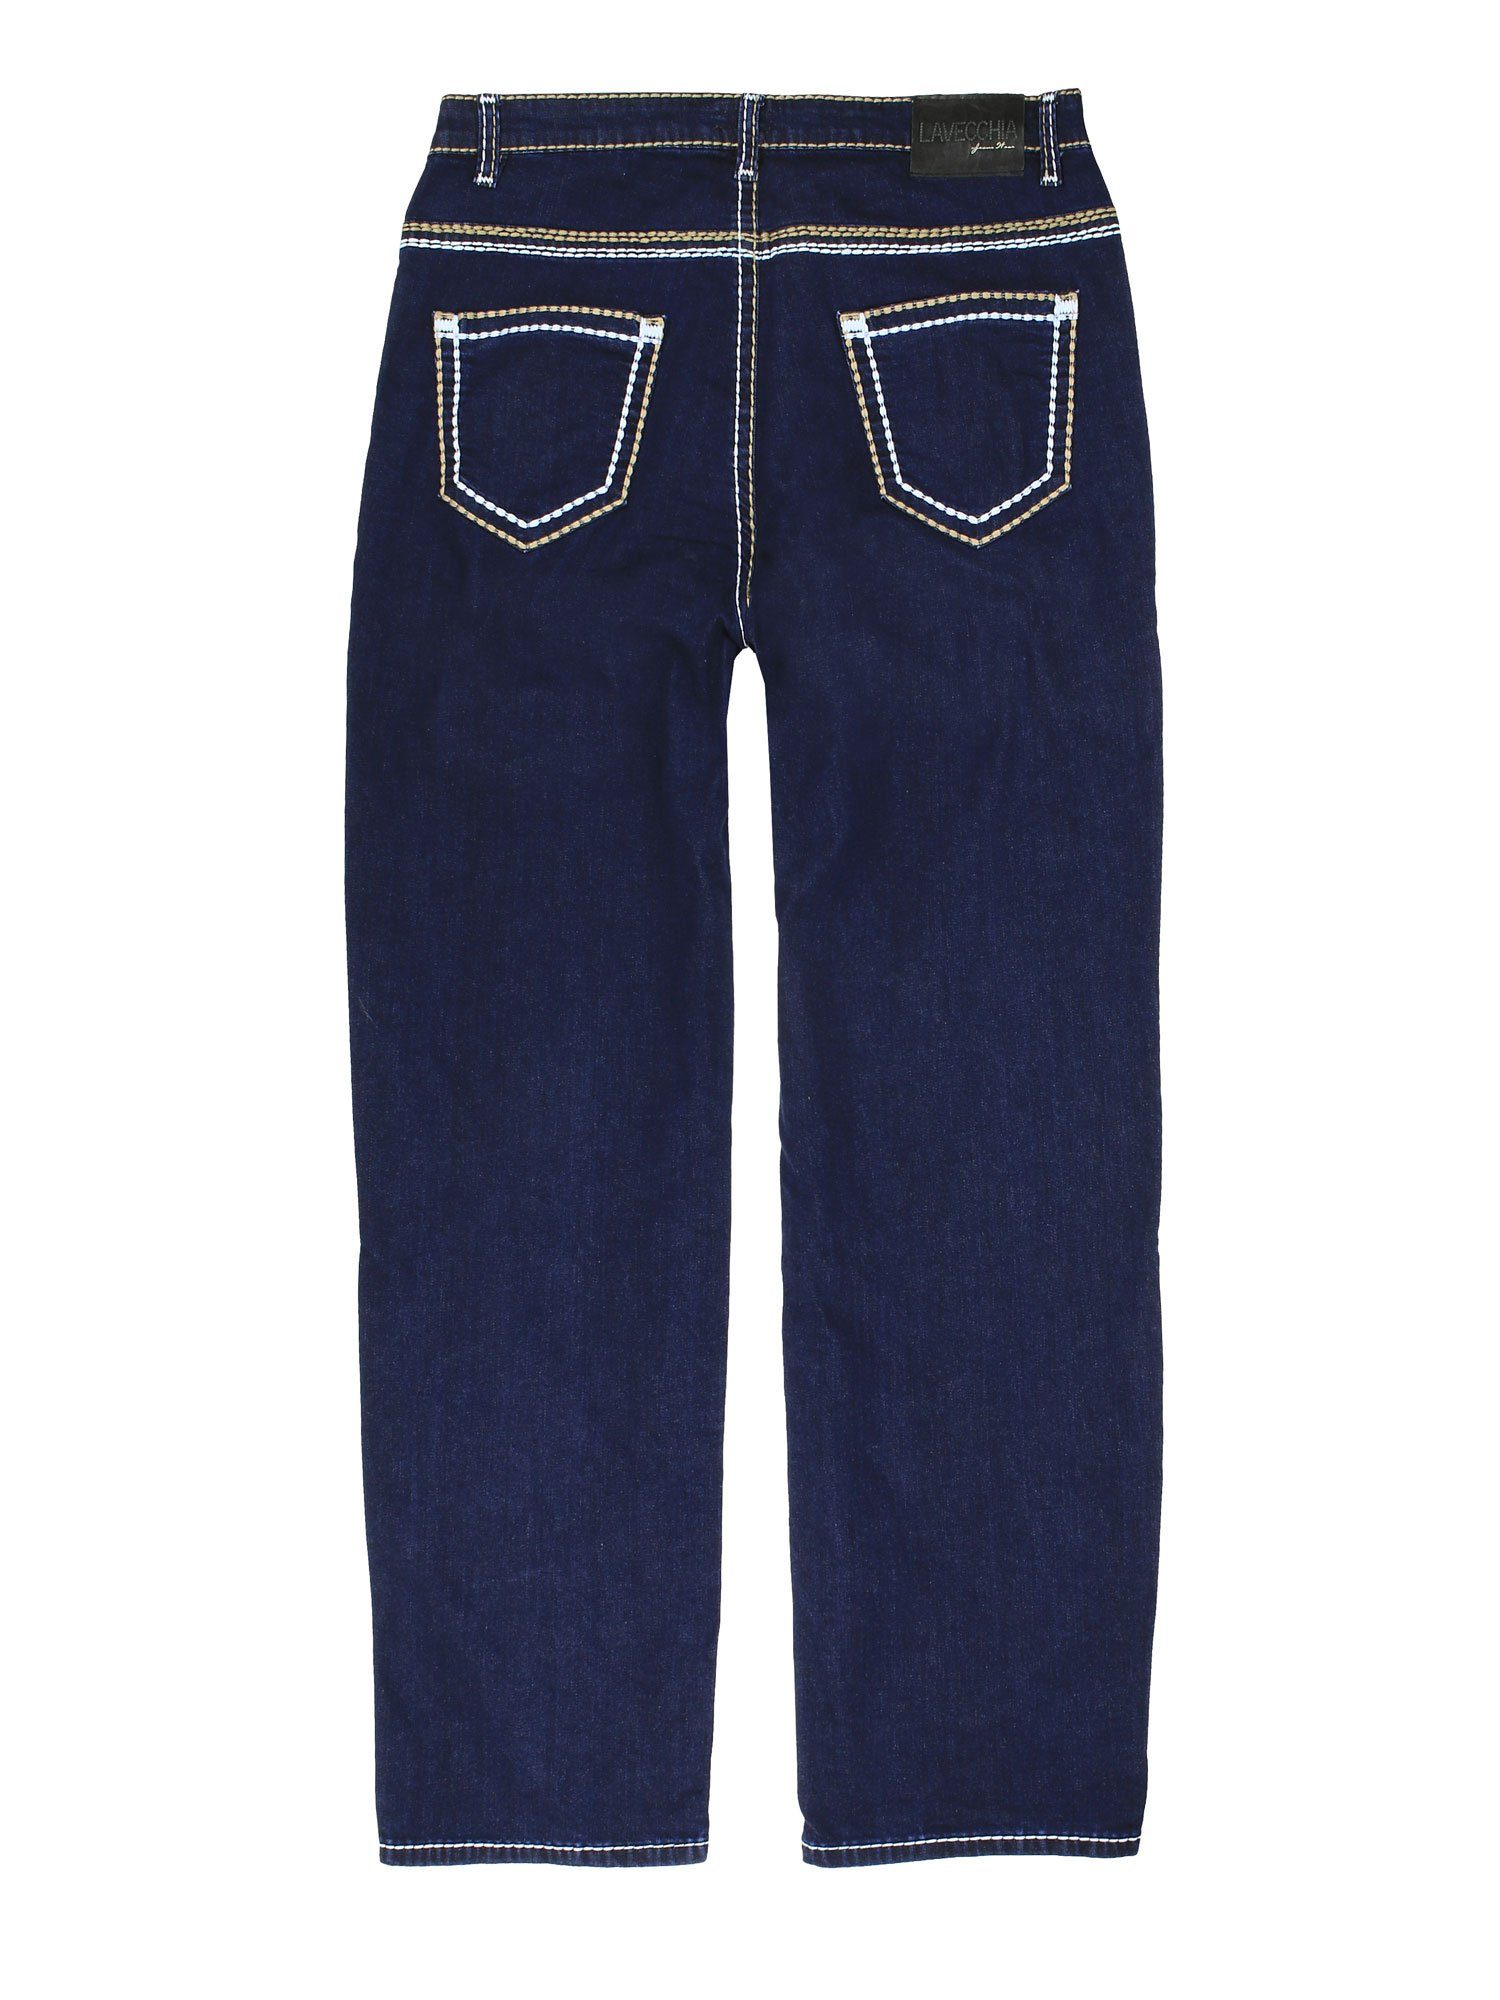 Comfort-fit-Jeans Naht dicker Übergrößen dunkelblau Herren Stretch Elasthan Jeanshose mit & LV-503 Lavecchia